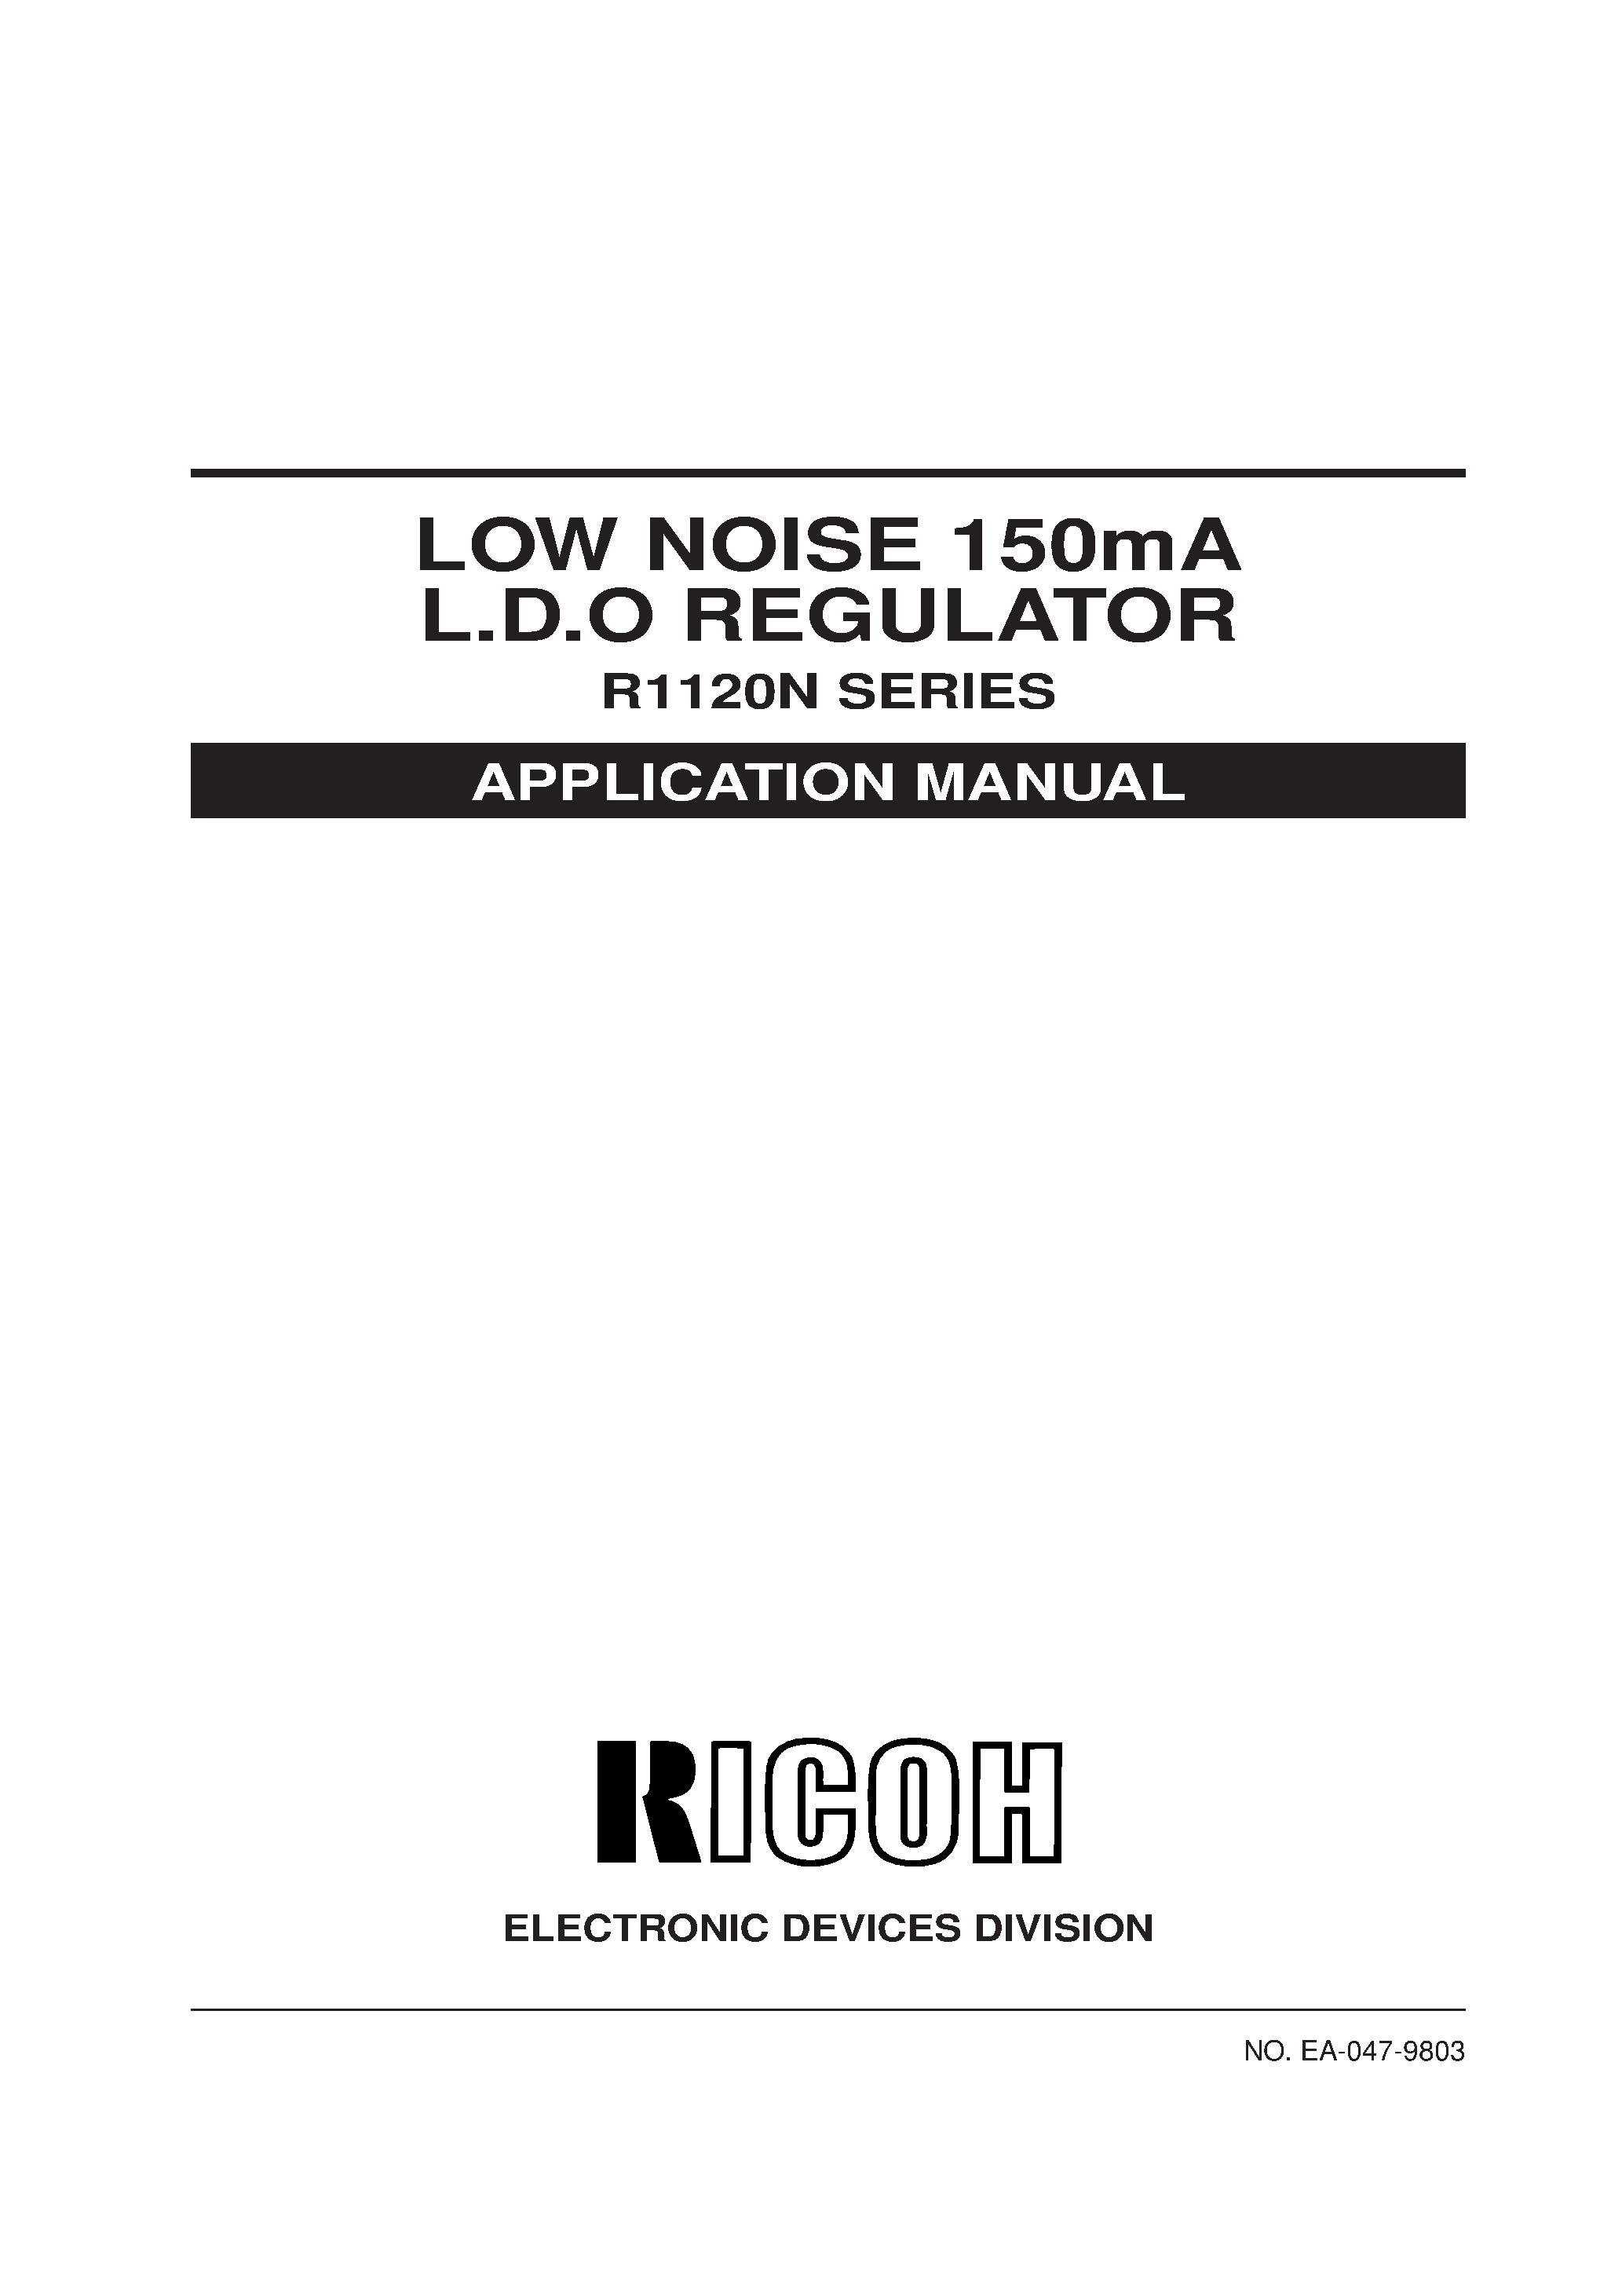 Datasheet R1120N401B-TR - LOW NOISE 150mA L.D.O REGULATOR page 1